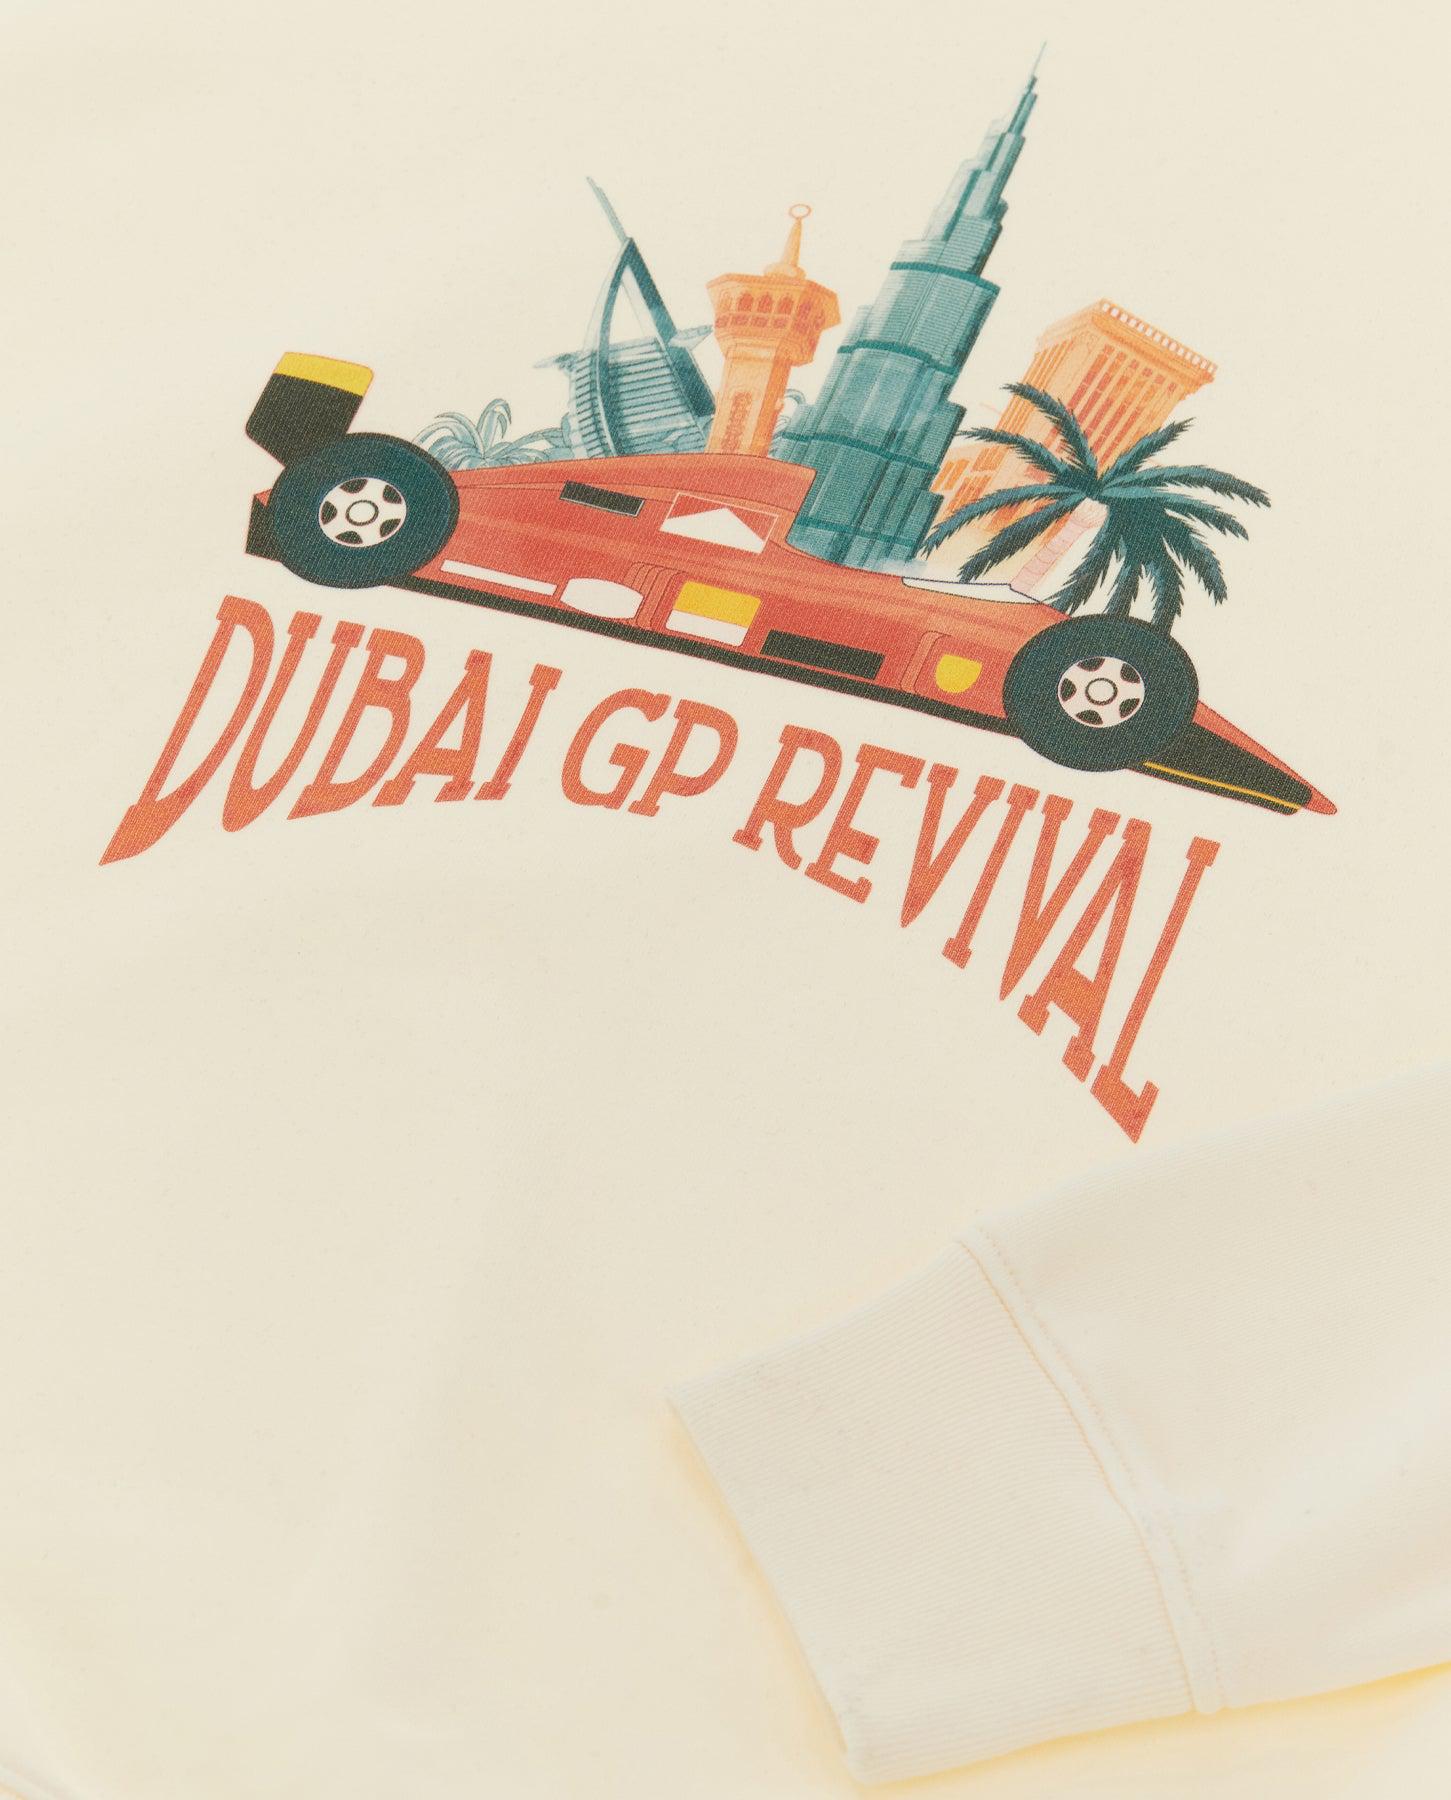 Gulf Historic x 8Js | Dubai GP Revival Sweatshirt-Sweatshirt-Gulf Historic-gpx-store